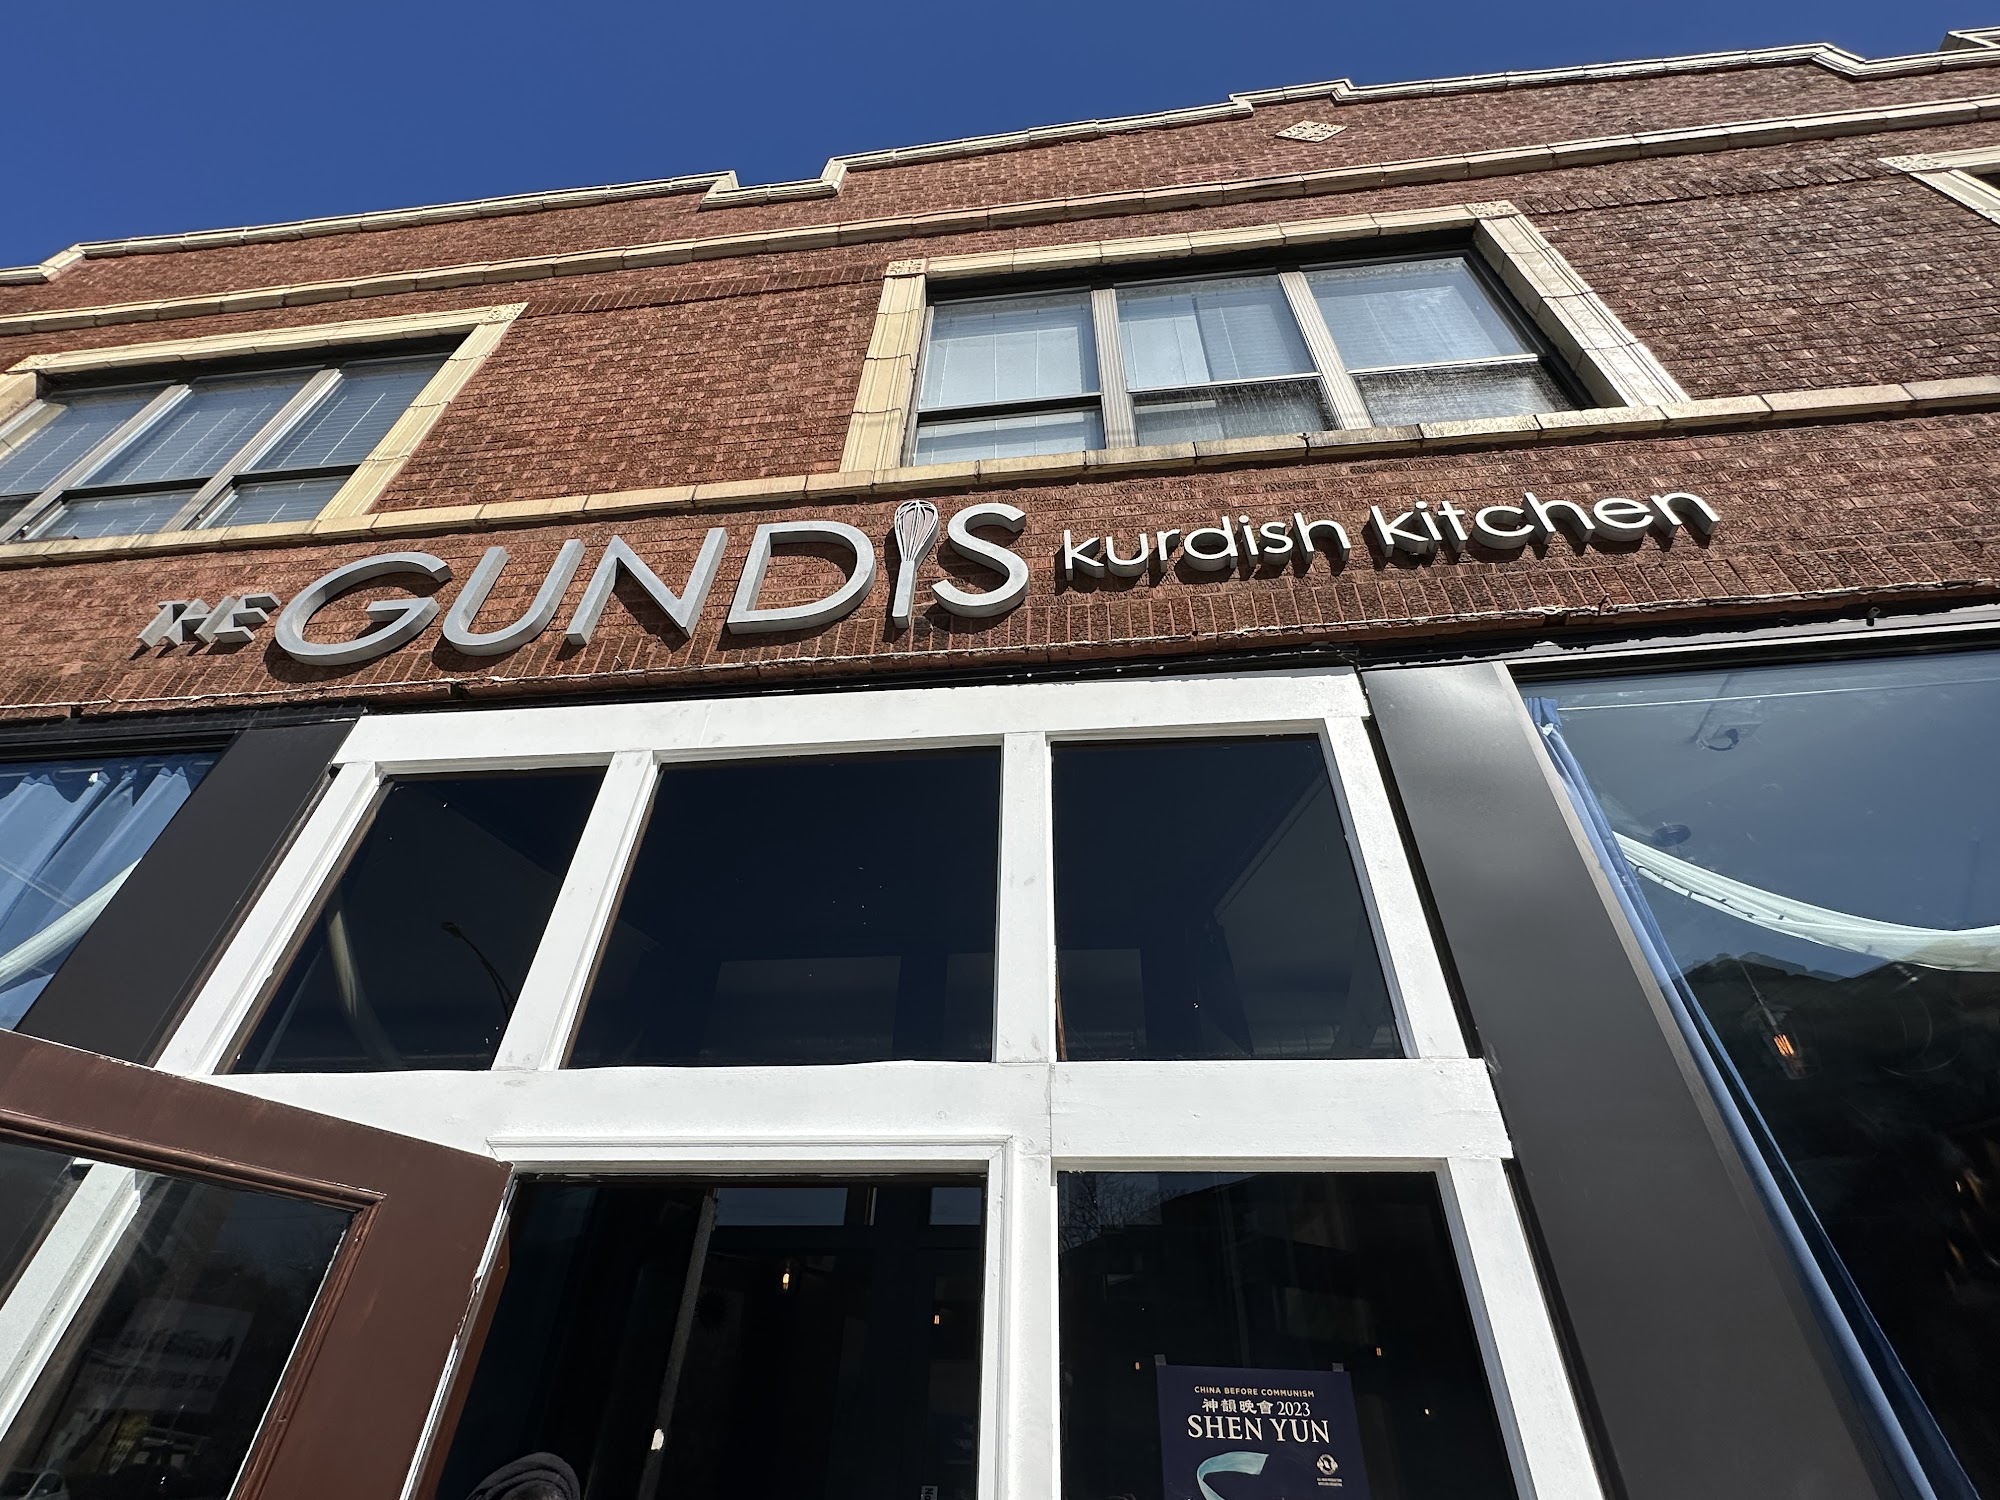 The Gundis Kurdish Kitchen